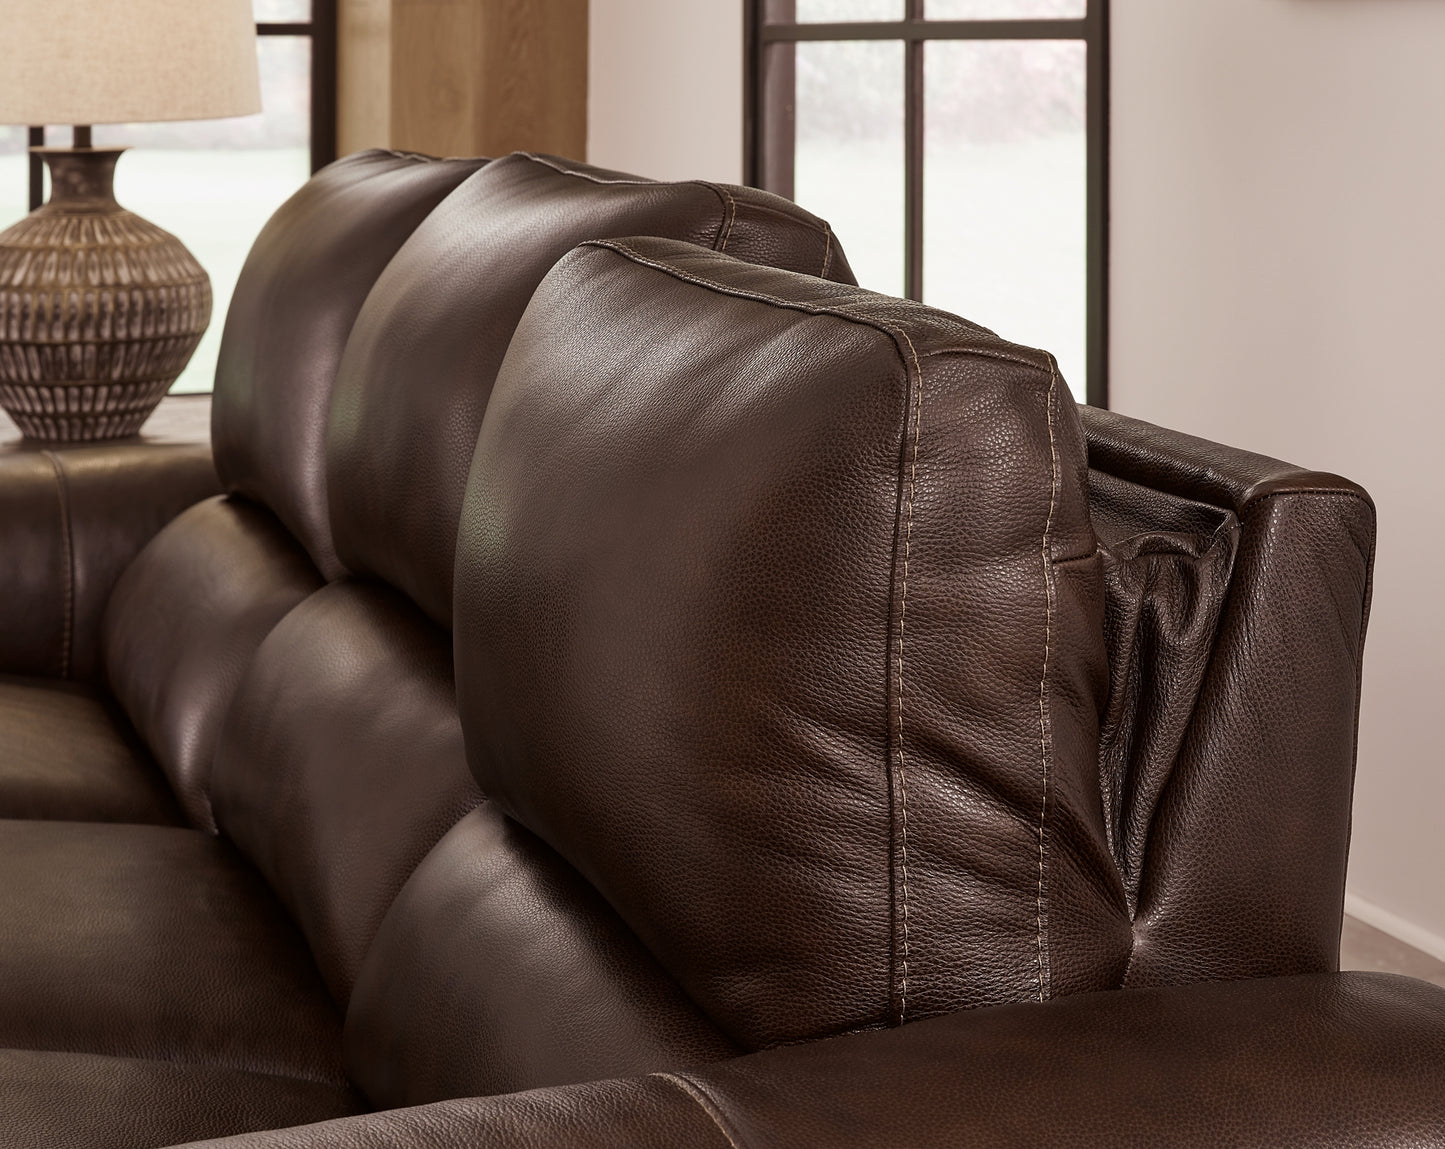 Alessandro PWR REC Sofa with ADJ Headrest JB's Furniture Furniture, Bedroom, Accessories